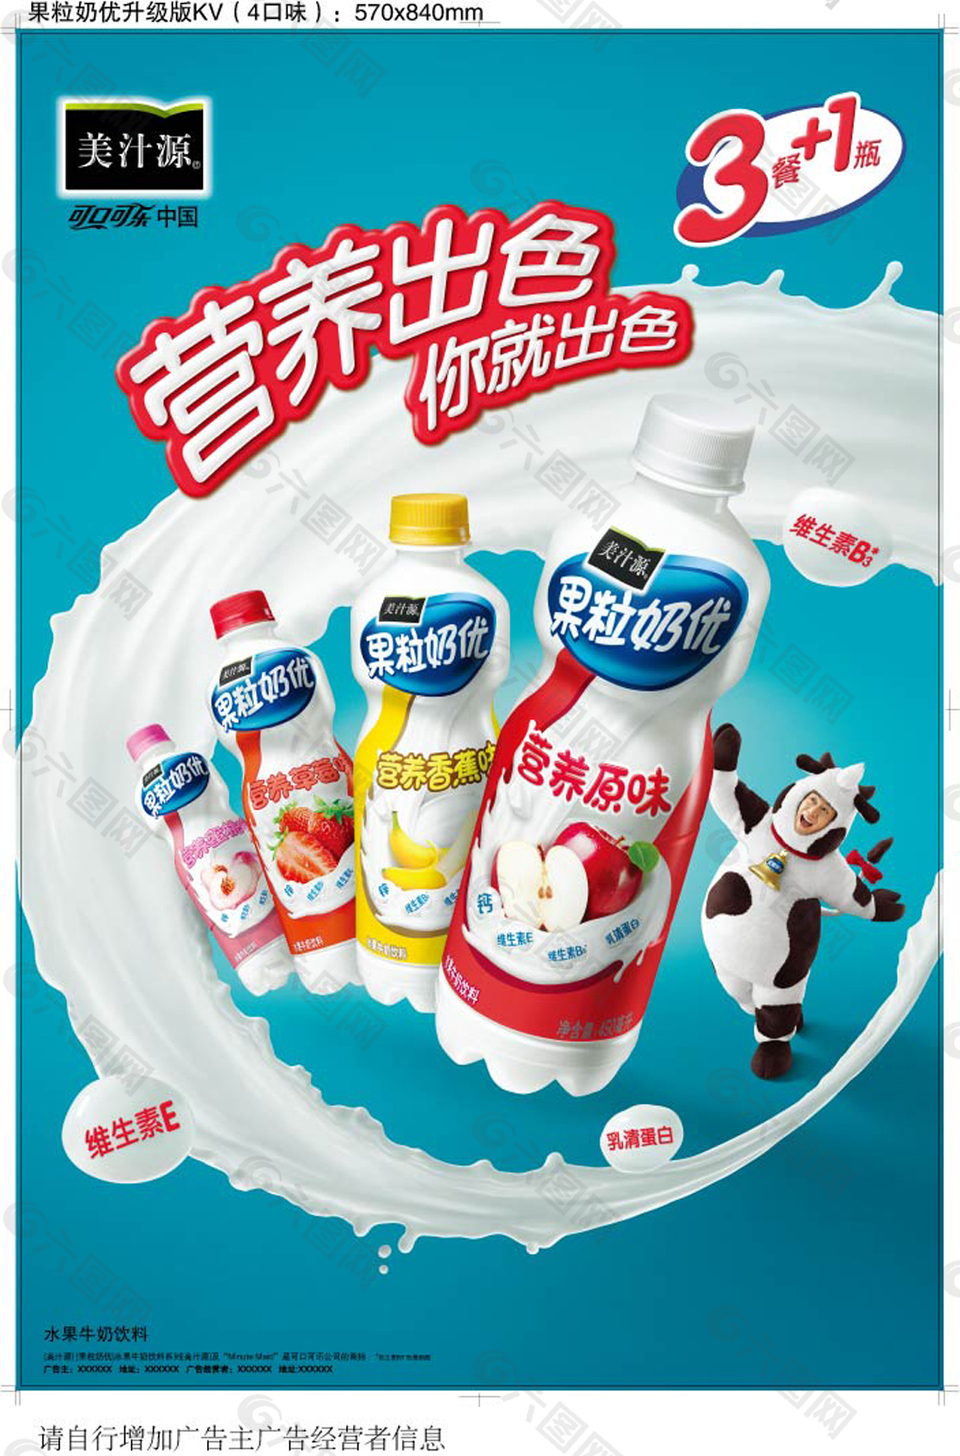 Mmd牛kv 4口味 平面广告素材免费下载 图片编号 六图网